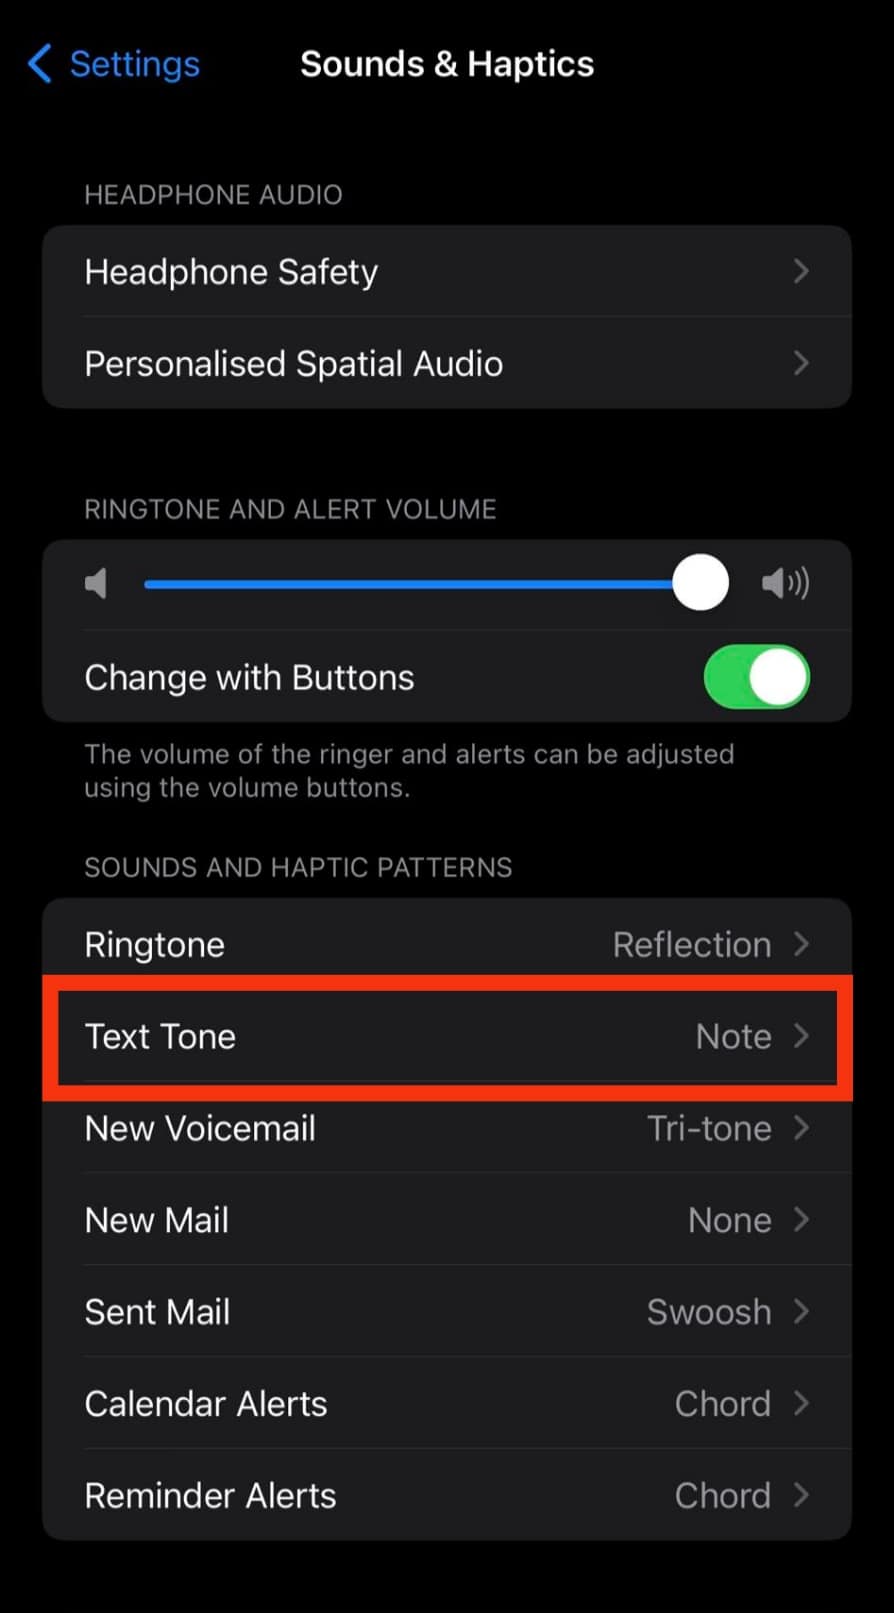 Select Text Tone